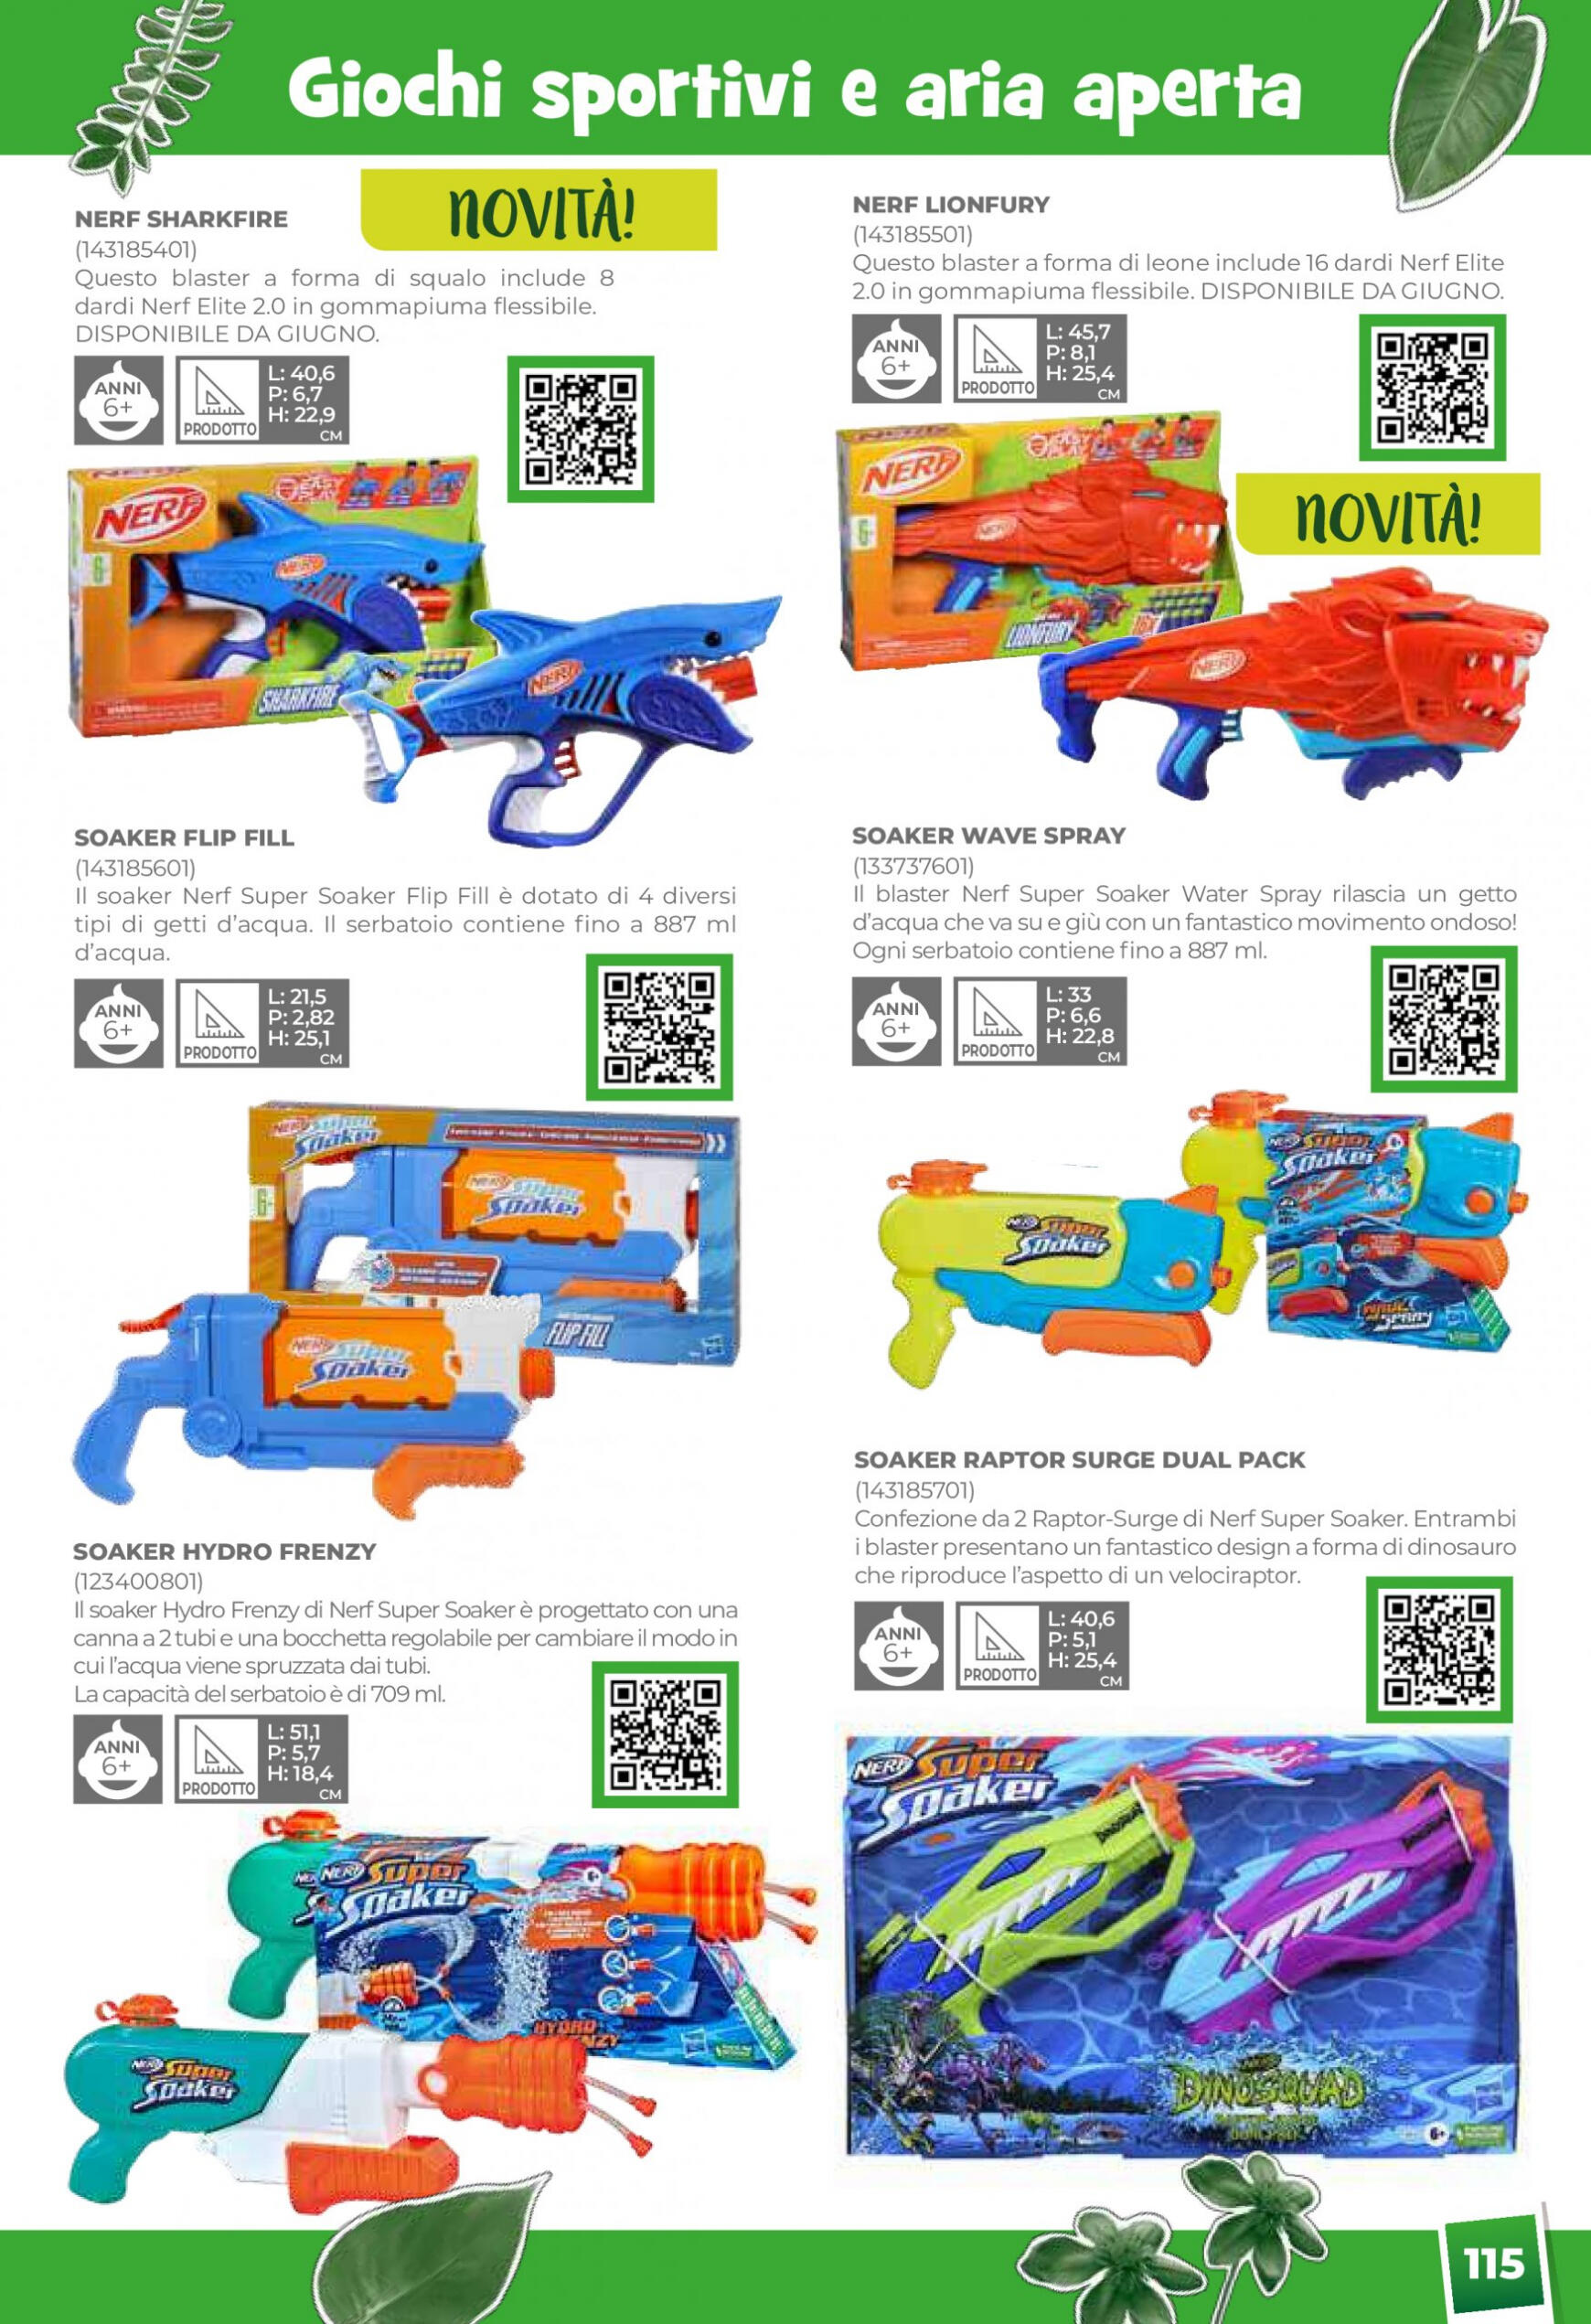 toys-center - Nuovo volantino Toys Center 01.05. - 31.12. - page: 117